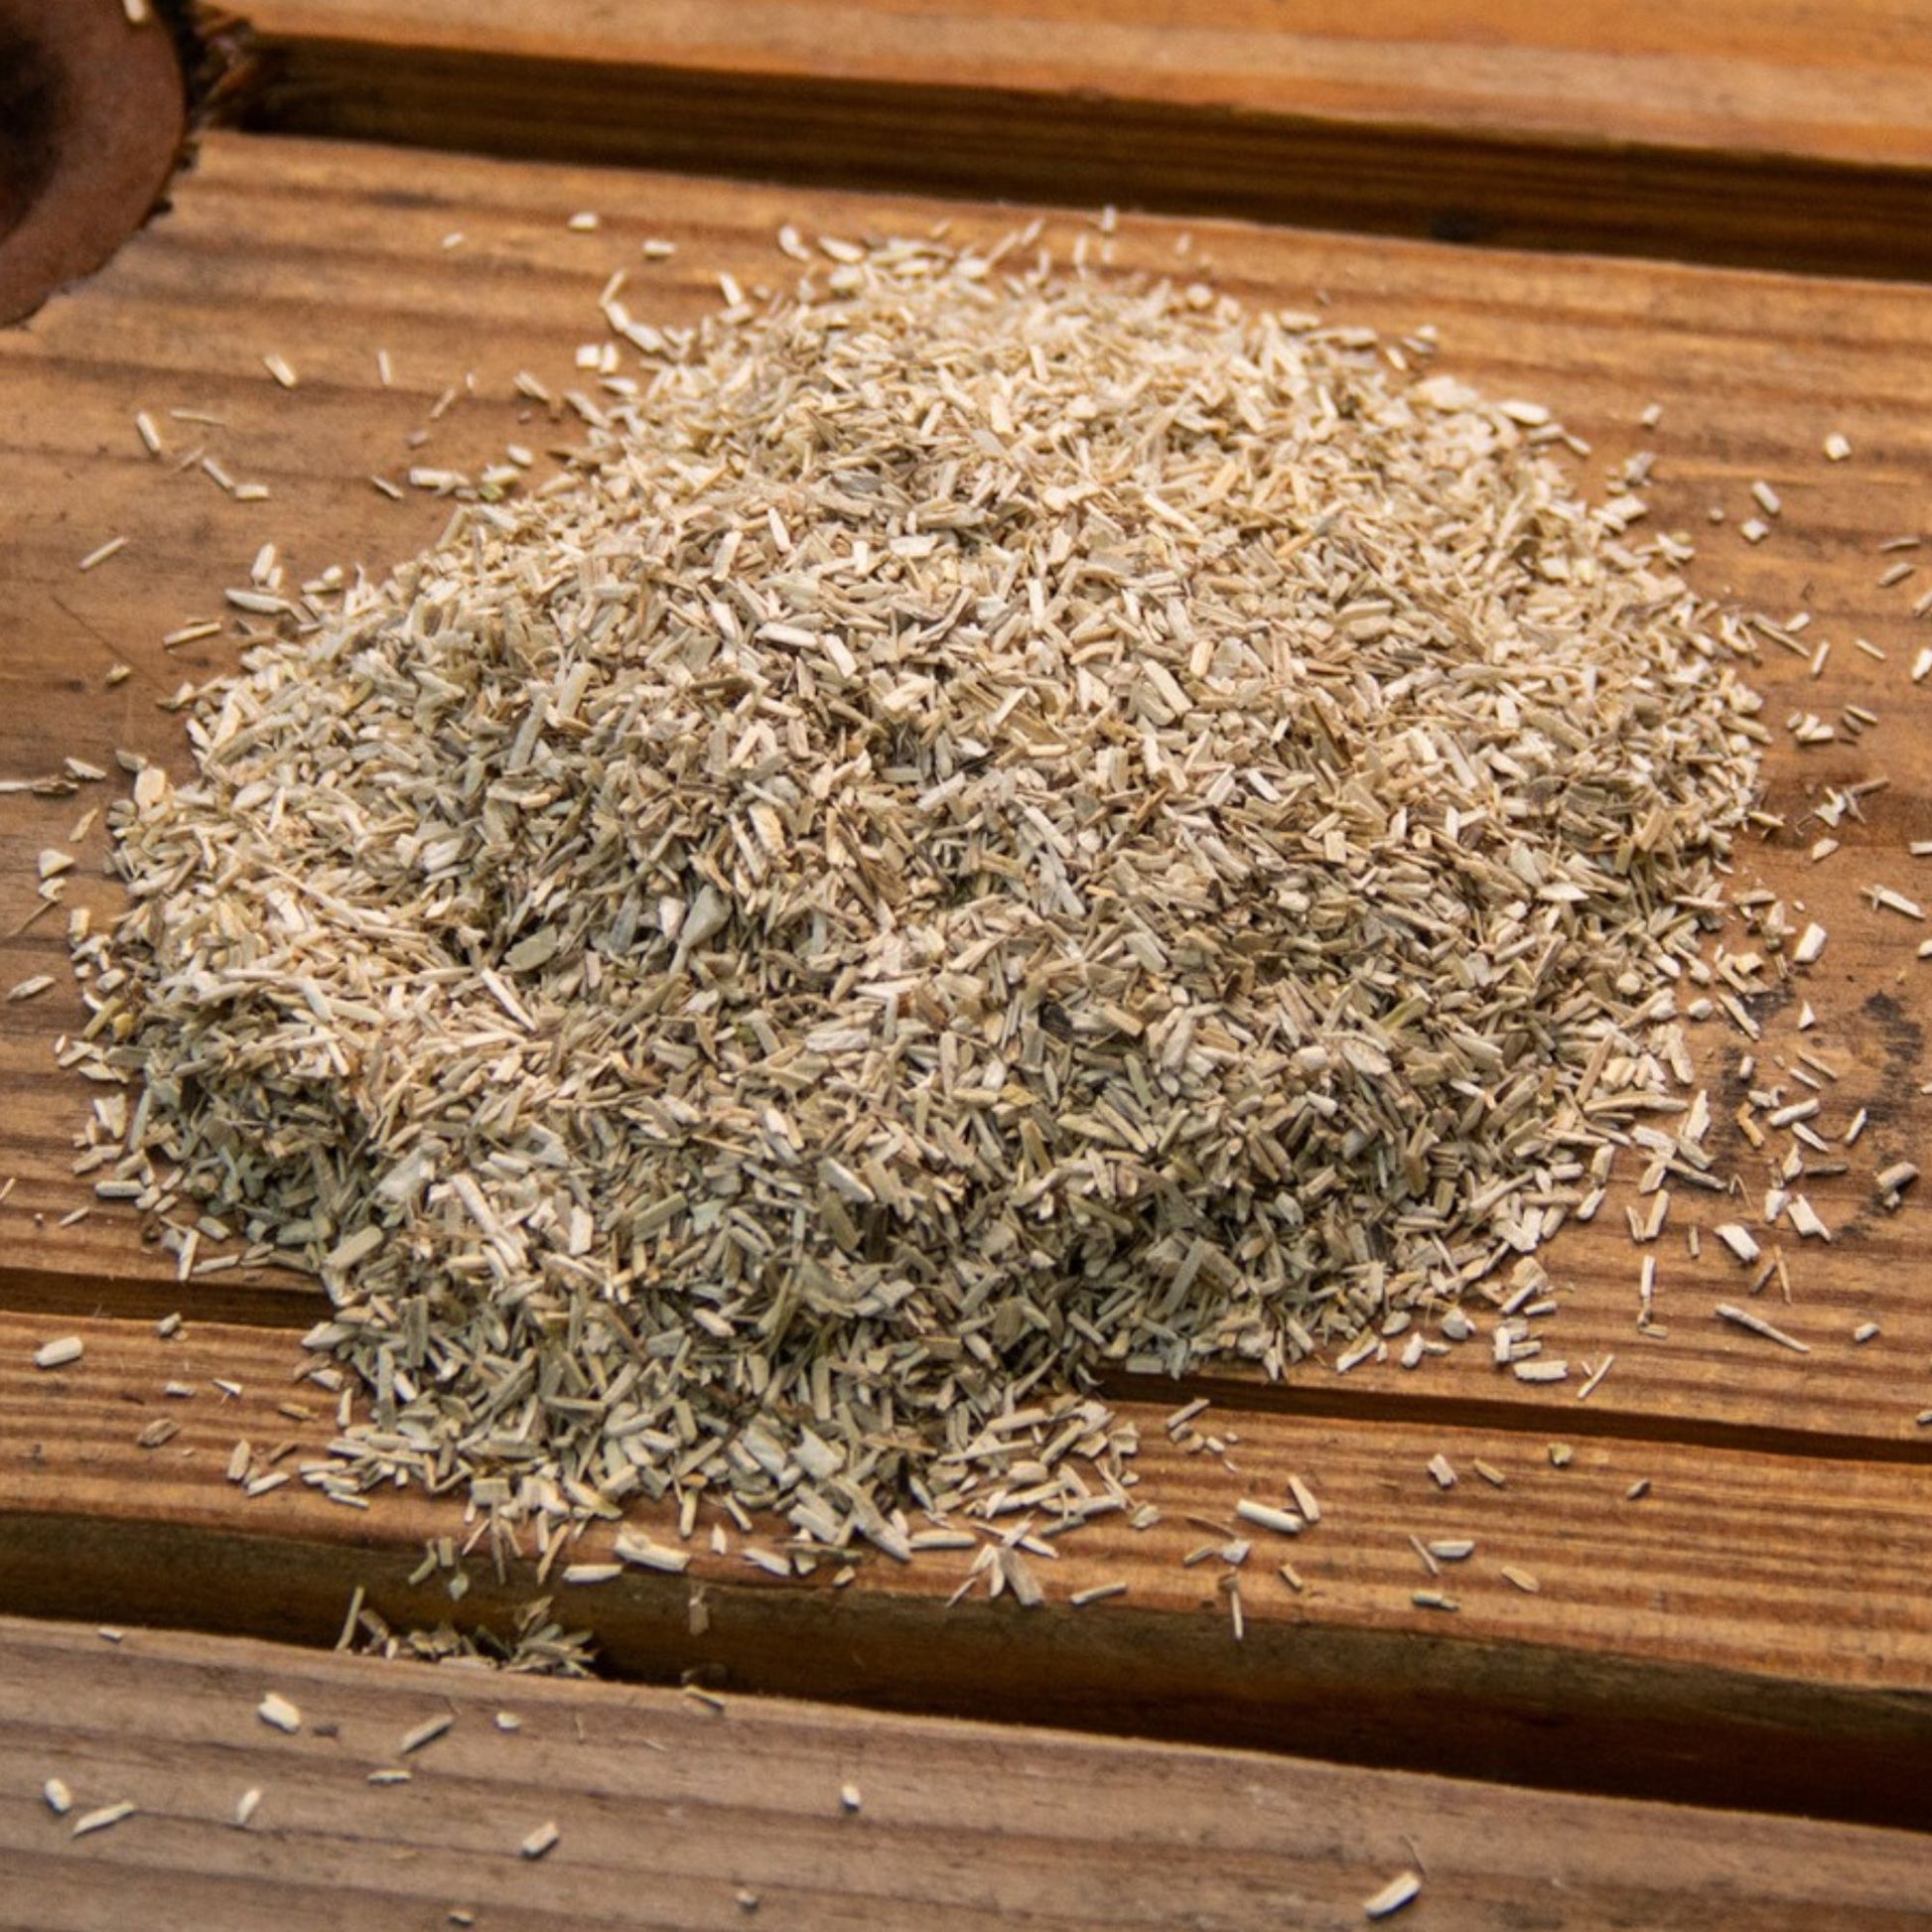  AubiChick Hemp Bedding for Chickens generates minimal dust compared to pine shaving bedding.